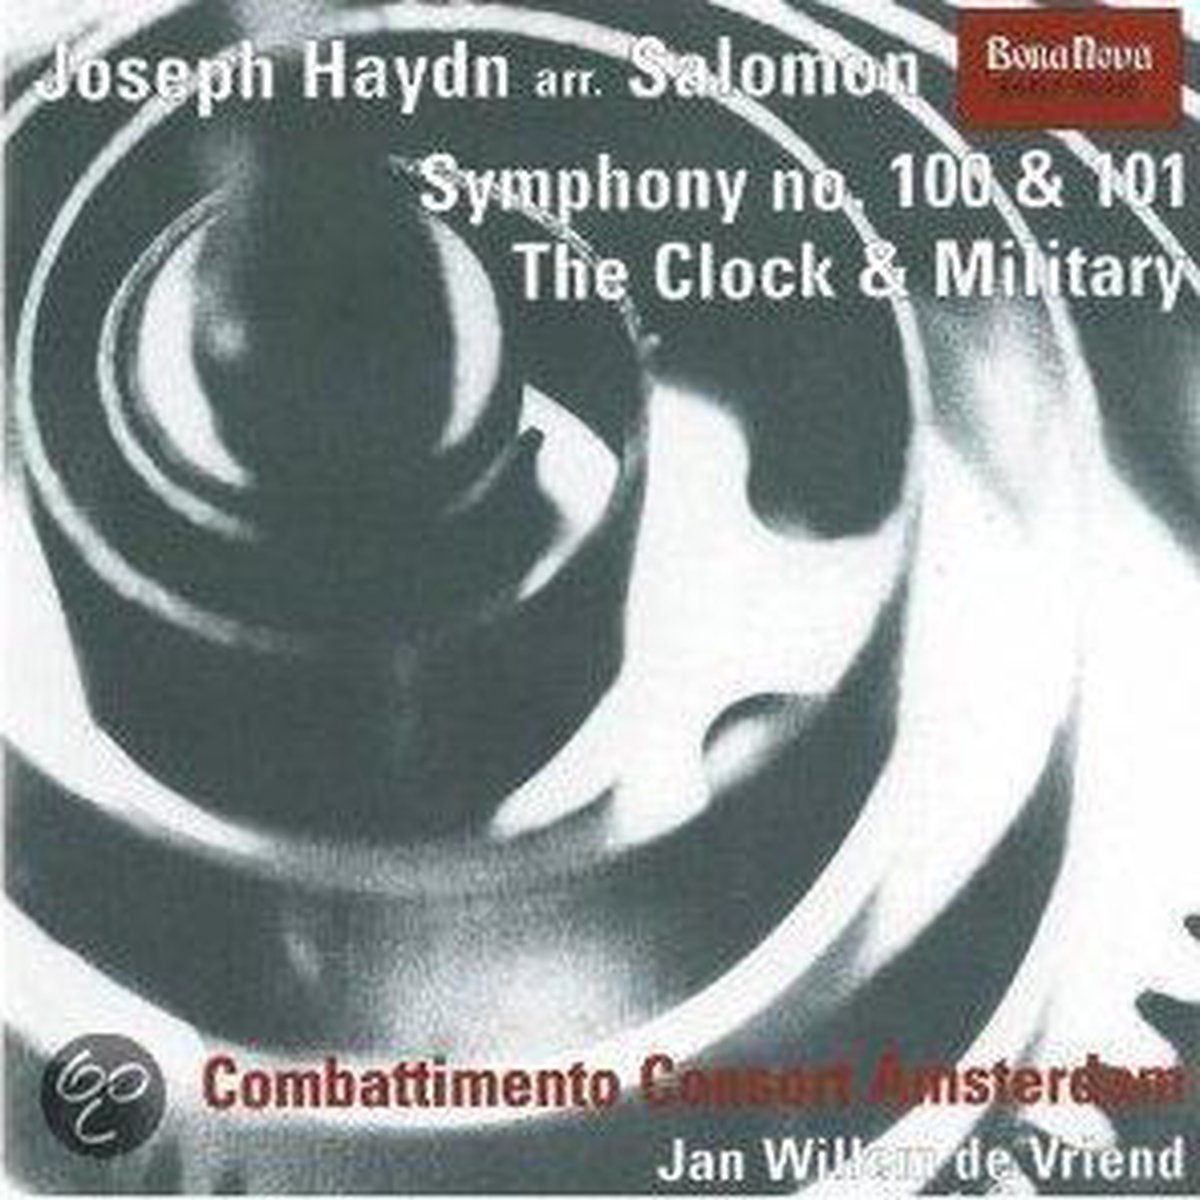 Symphonies 100 & 101 - Joseph Haydn